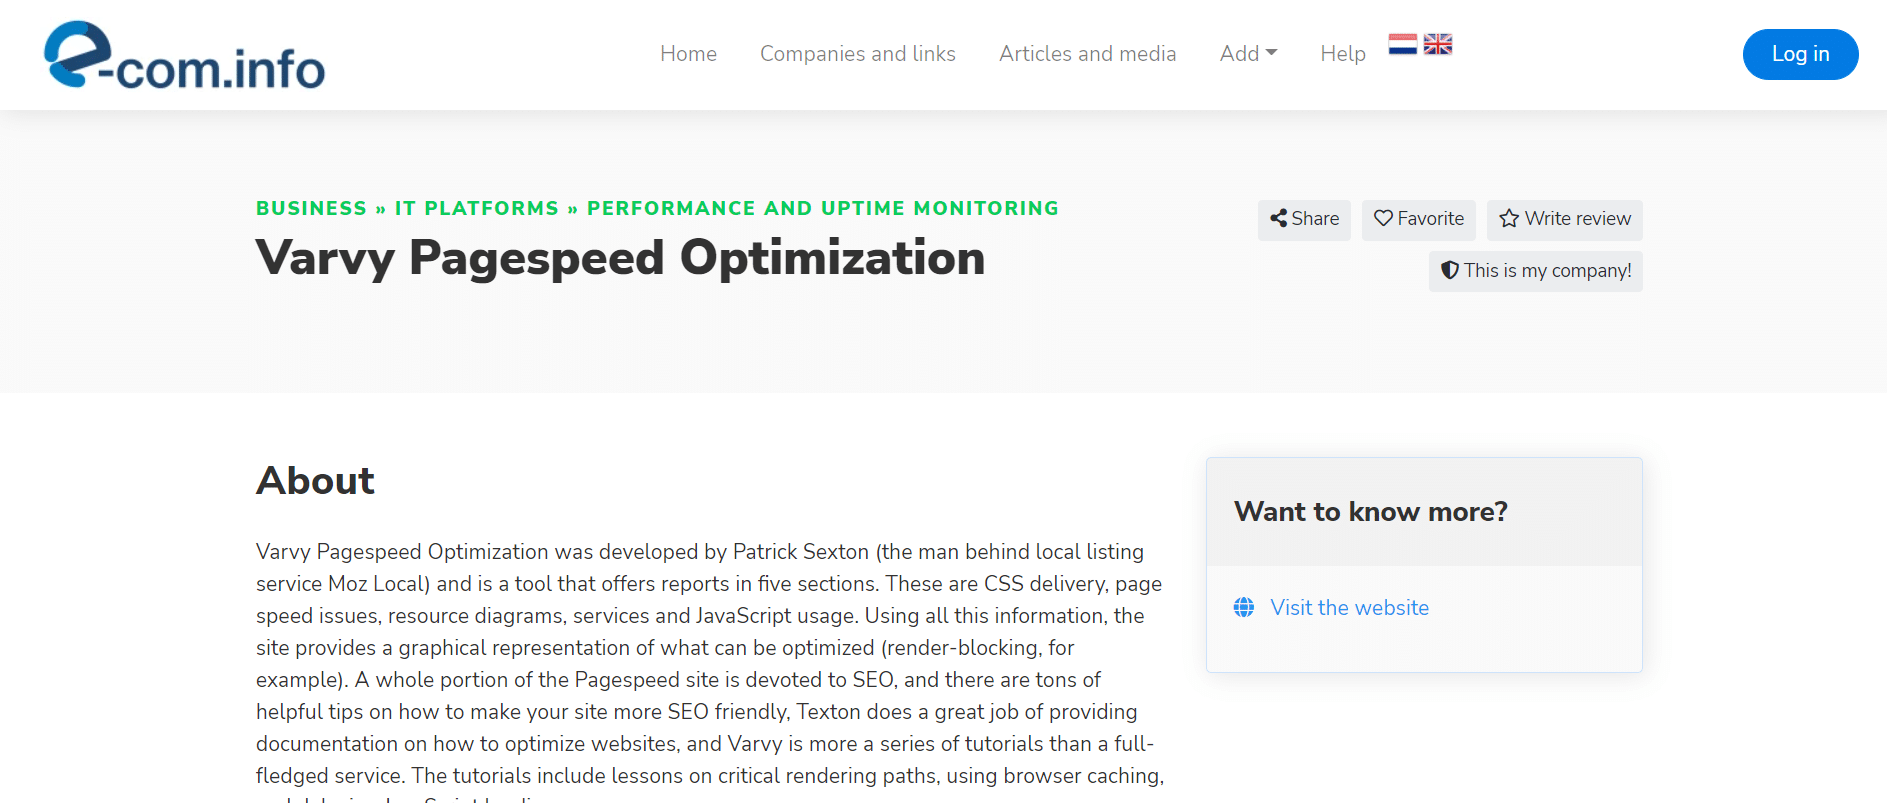 Varvy Pagespeed Optimization